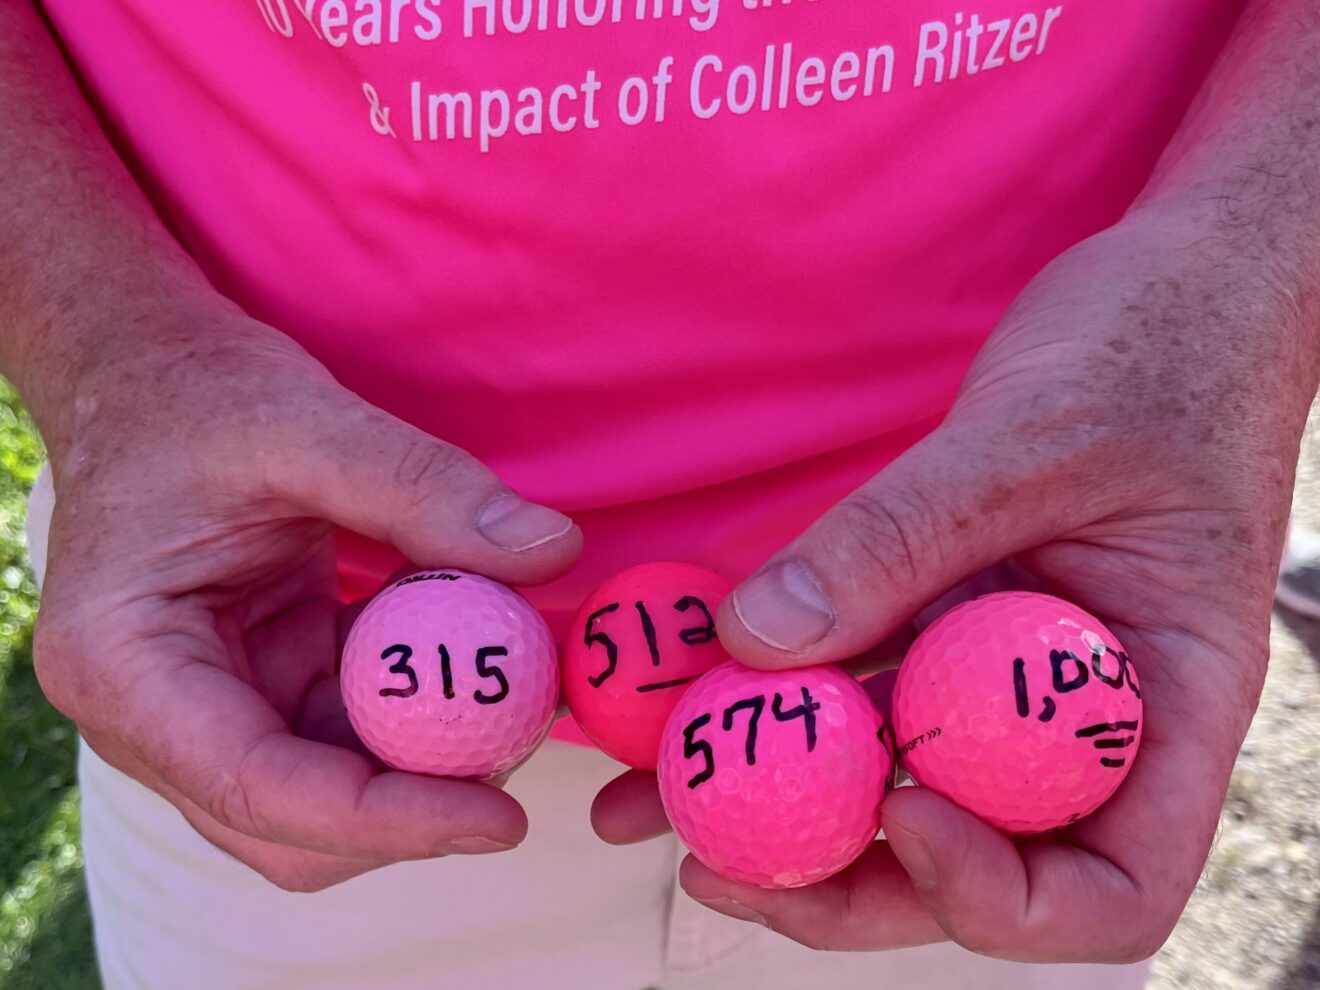 Golf Ball Drop Raises $13K: Neighbor News